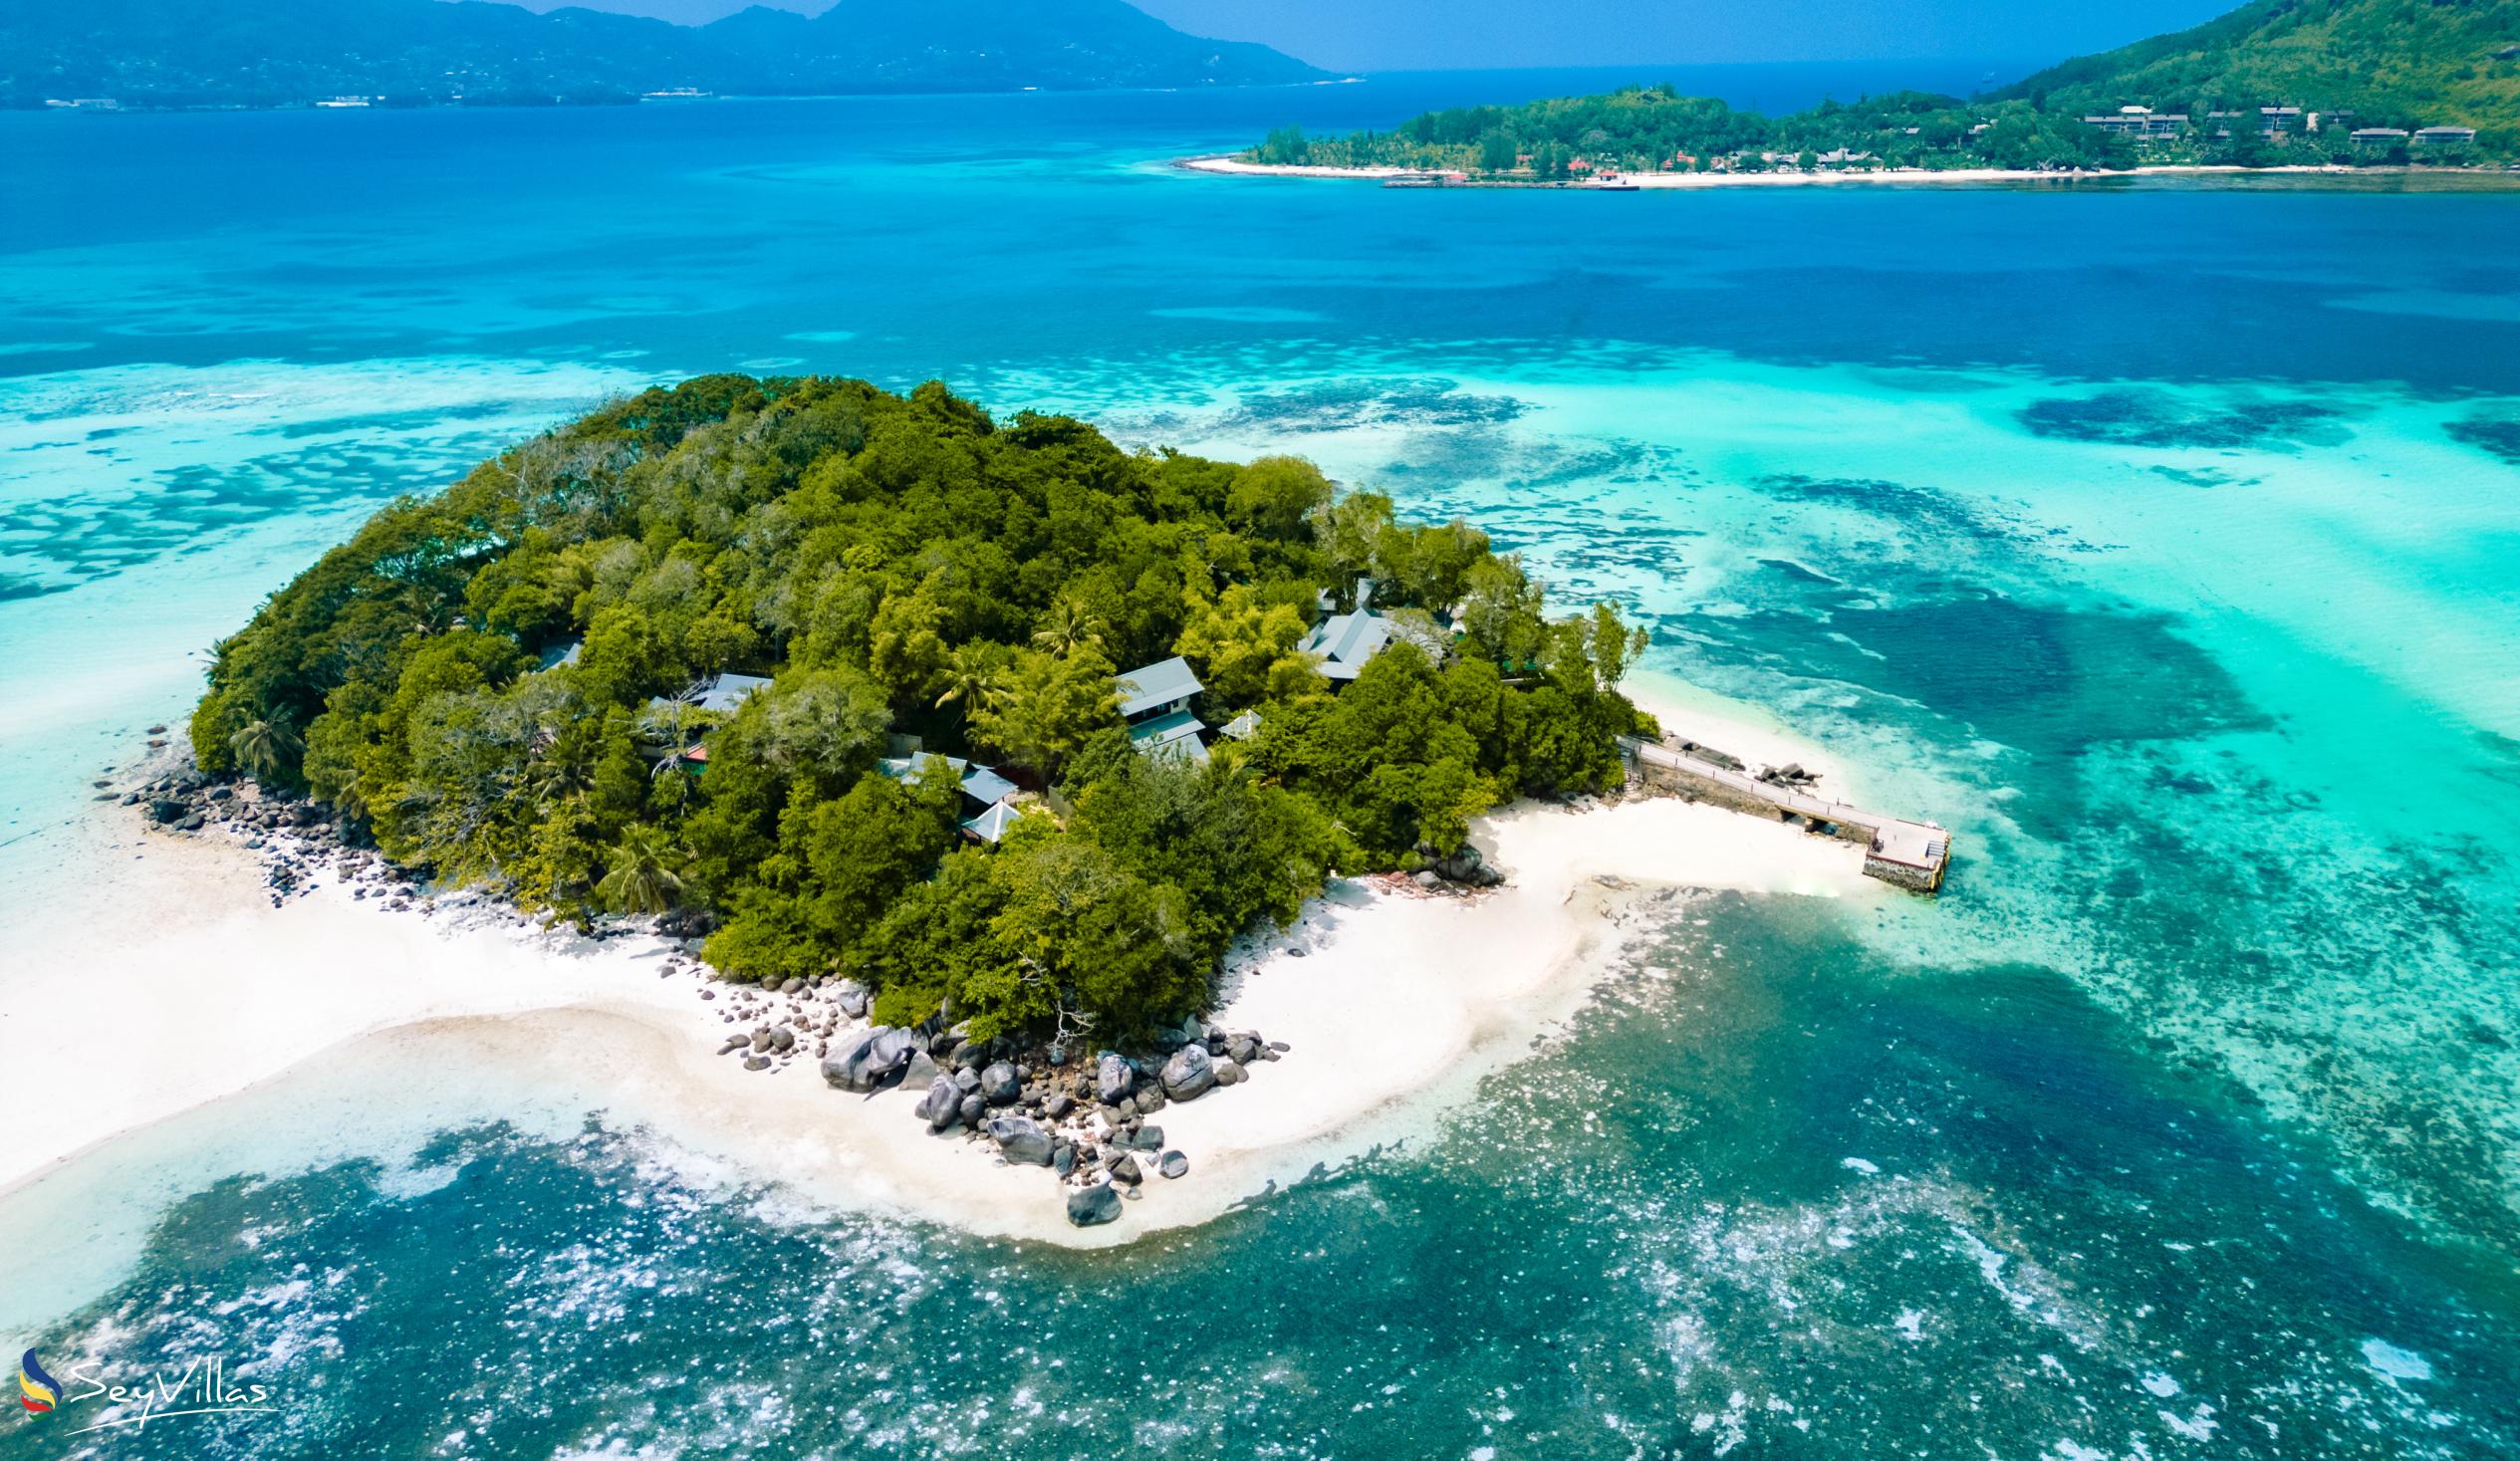 Photo 10: JA Enchanted Island Resort - Location - Round Island (Seychelles)